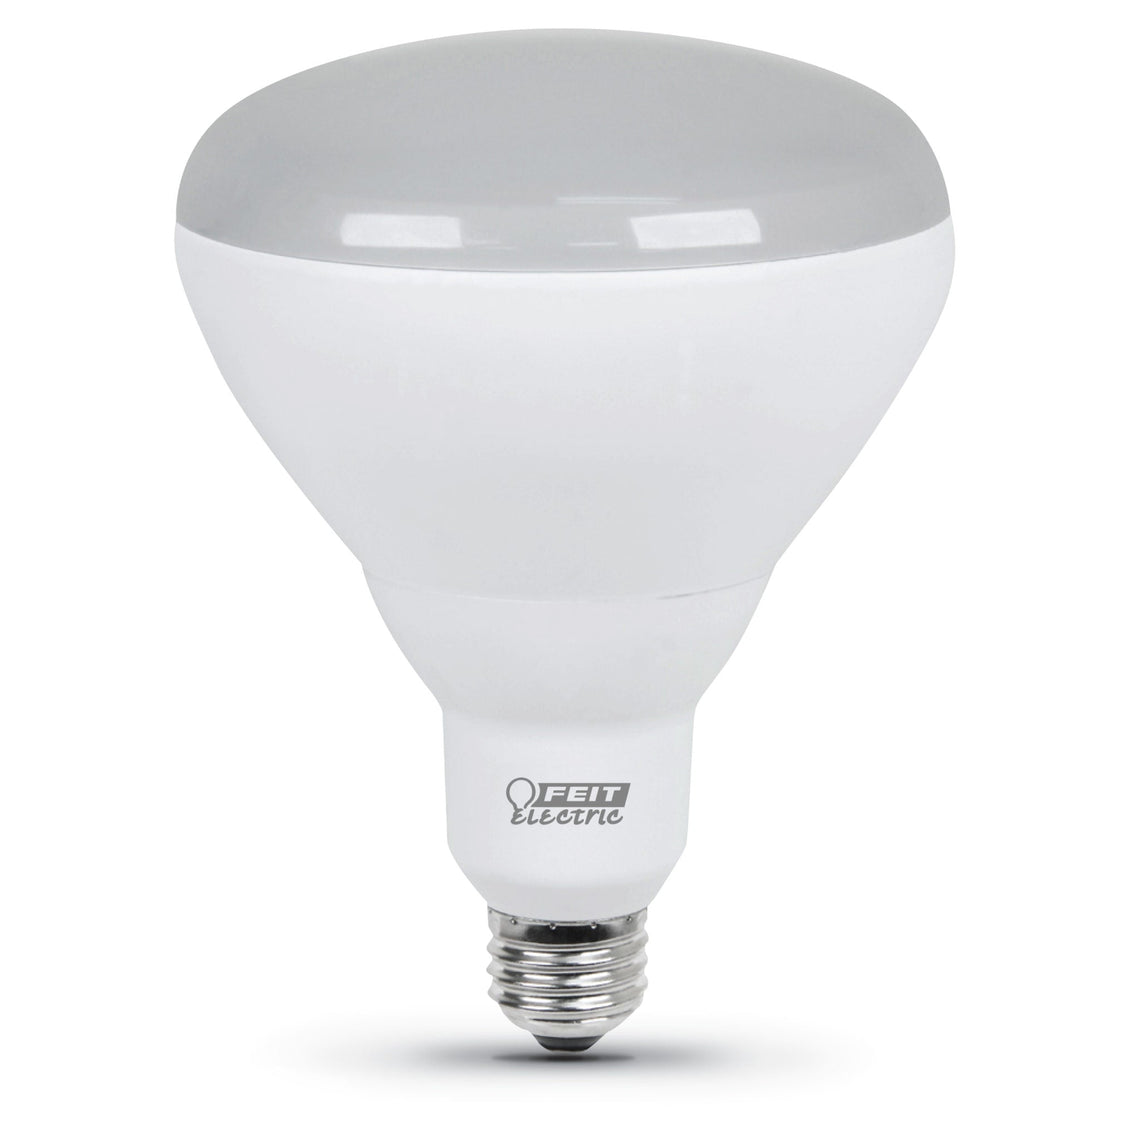 BR40 LED Light bulbs, 9.4 Watts, E26, Dimmable, 850 lumens, 2700K